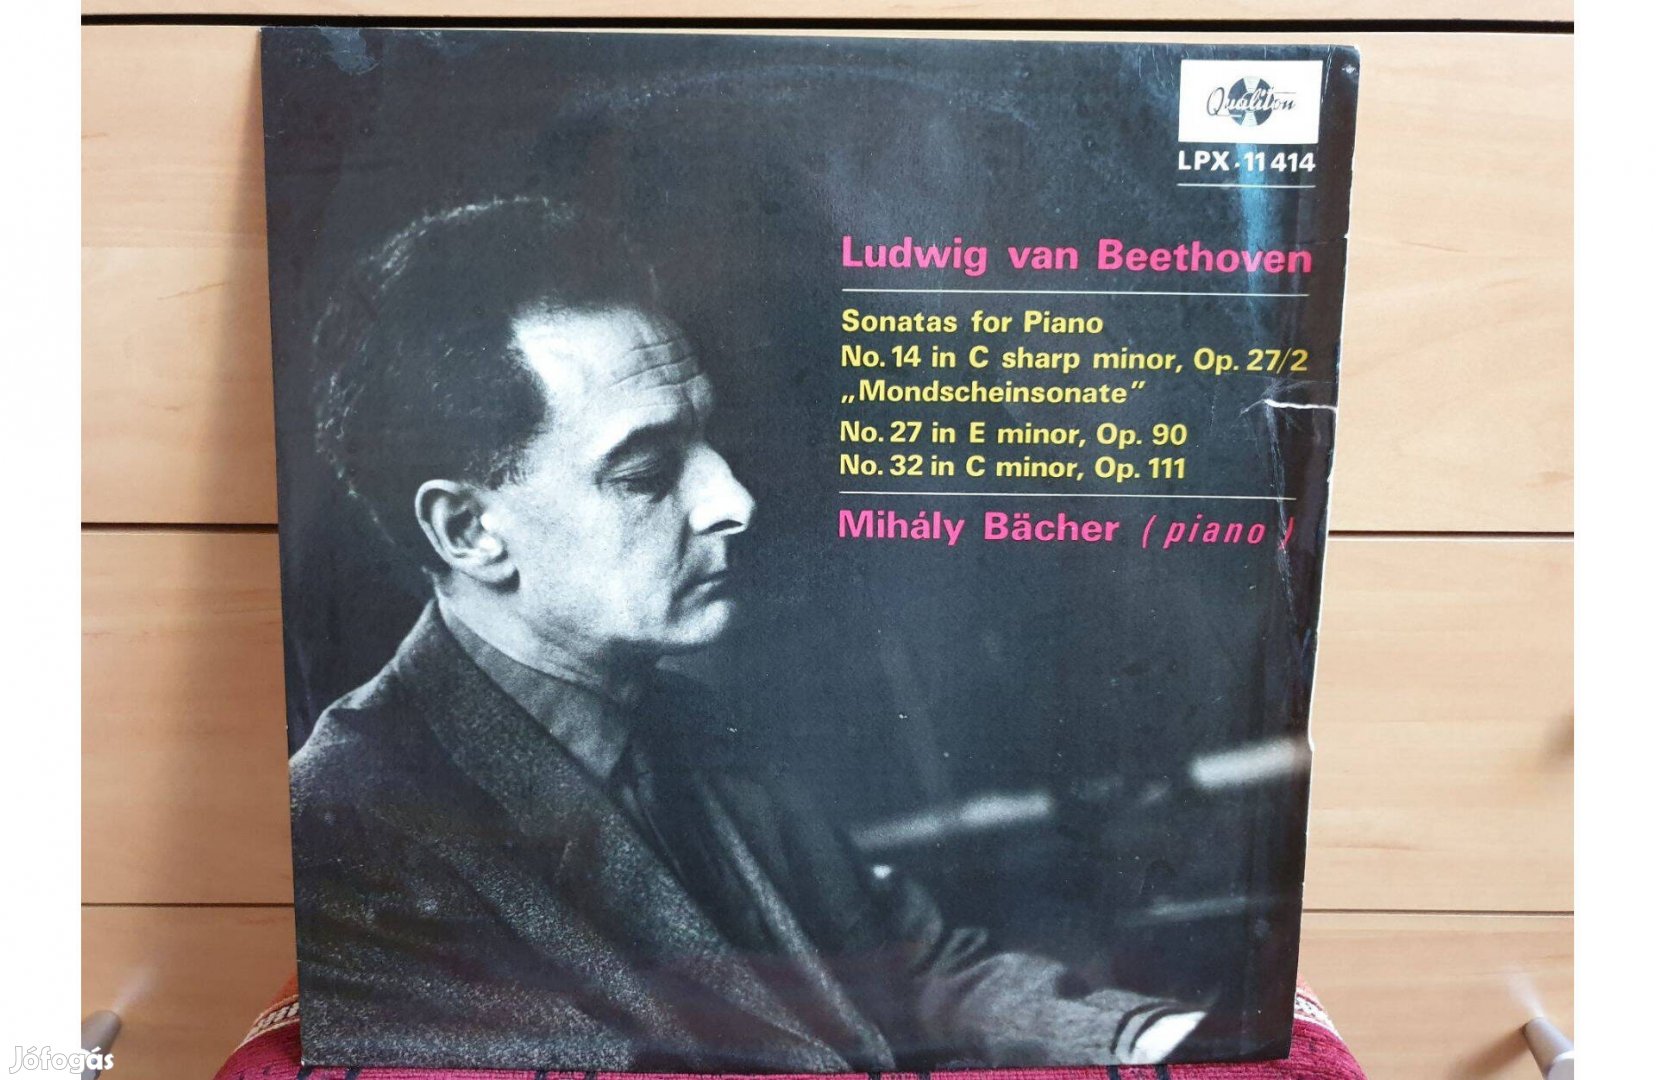 Bacher Mihály (piano) - Beethoven hanglemez bakelit lemez Vinyl